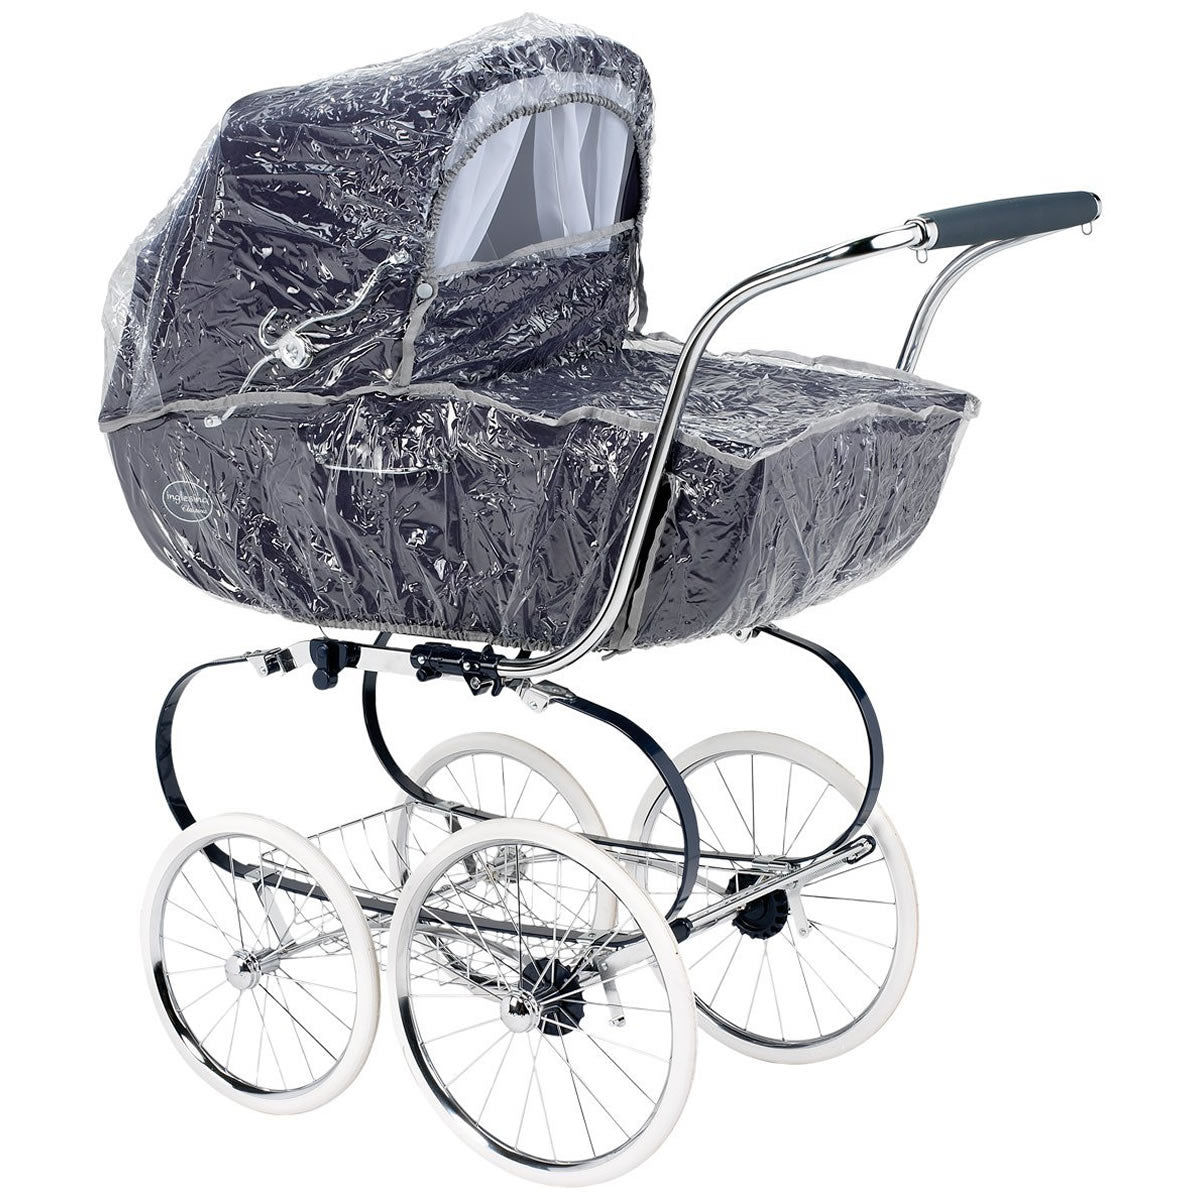 inglesina baby carriage